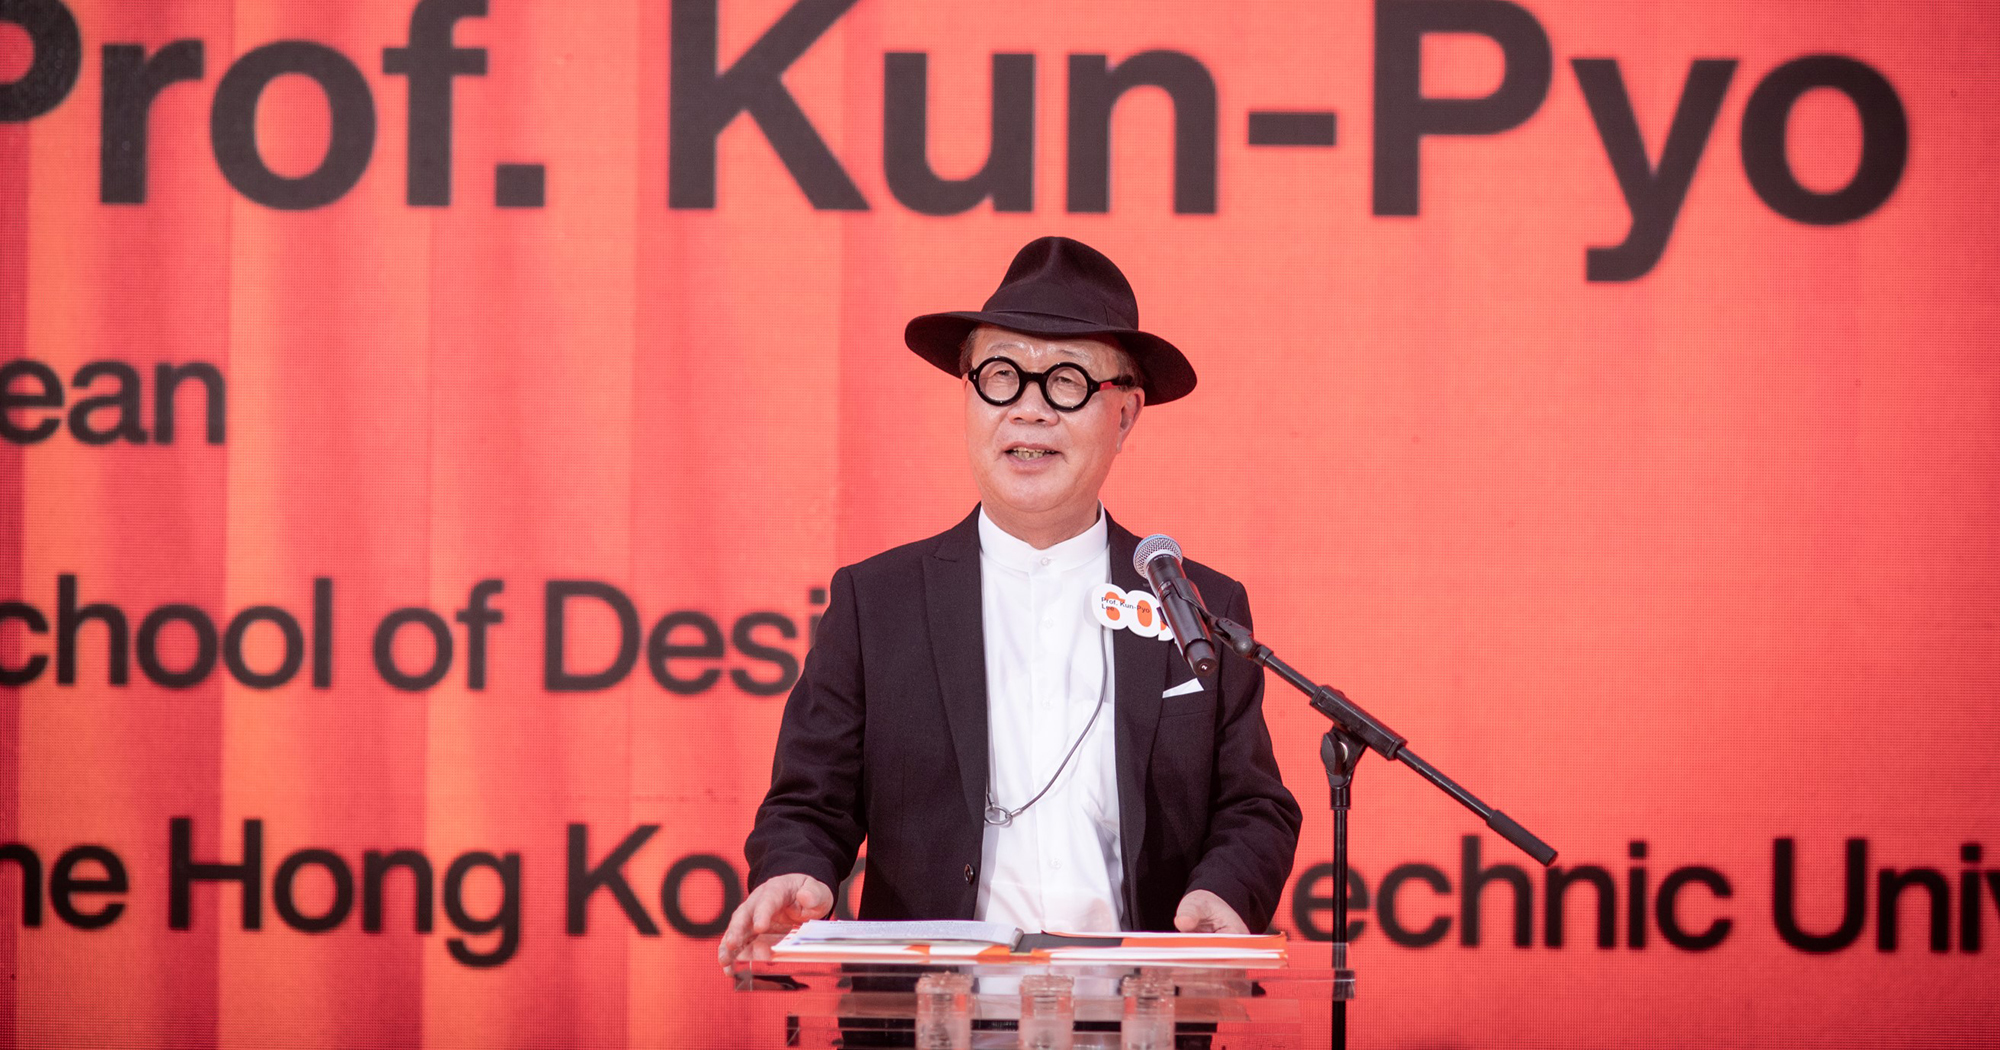 Prof. Kun-Pyo Lee, Dean of School of Design of PolyU